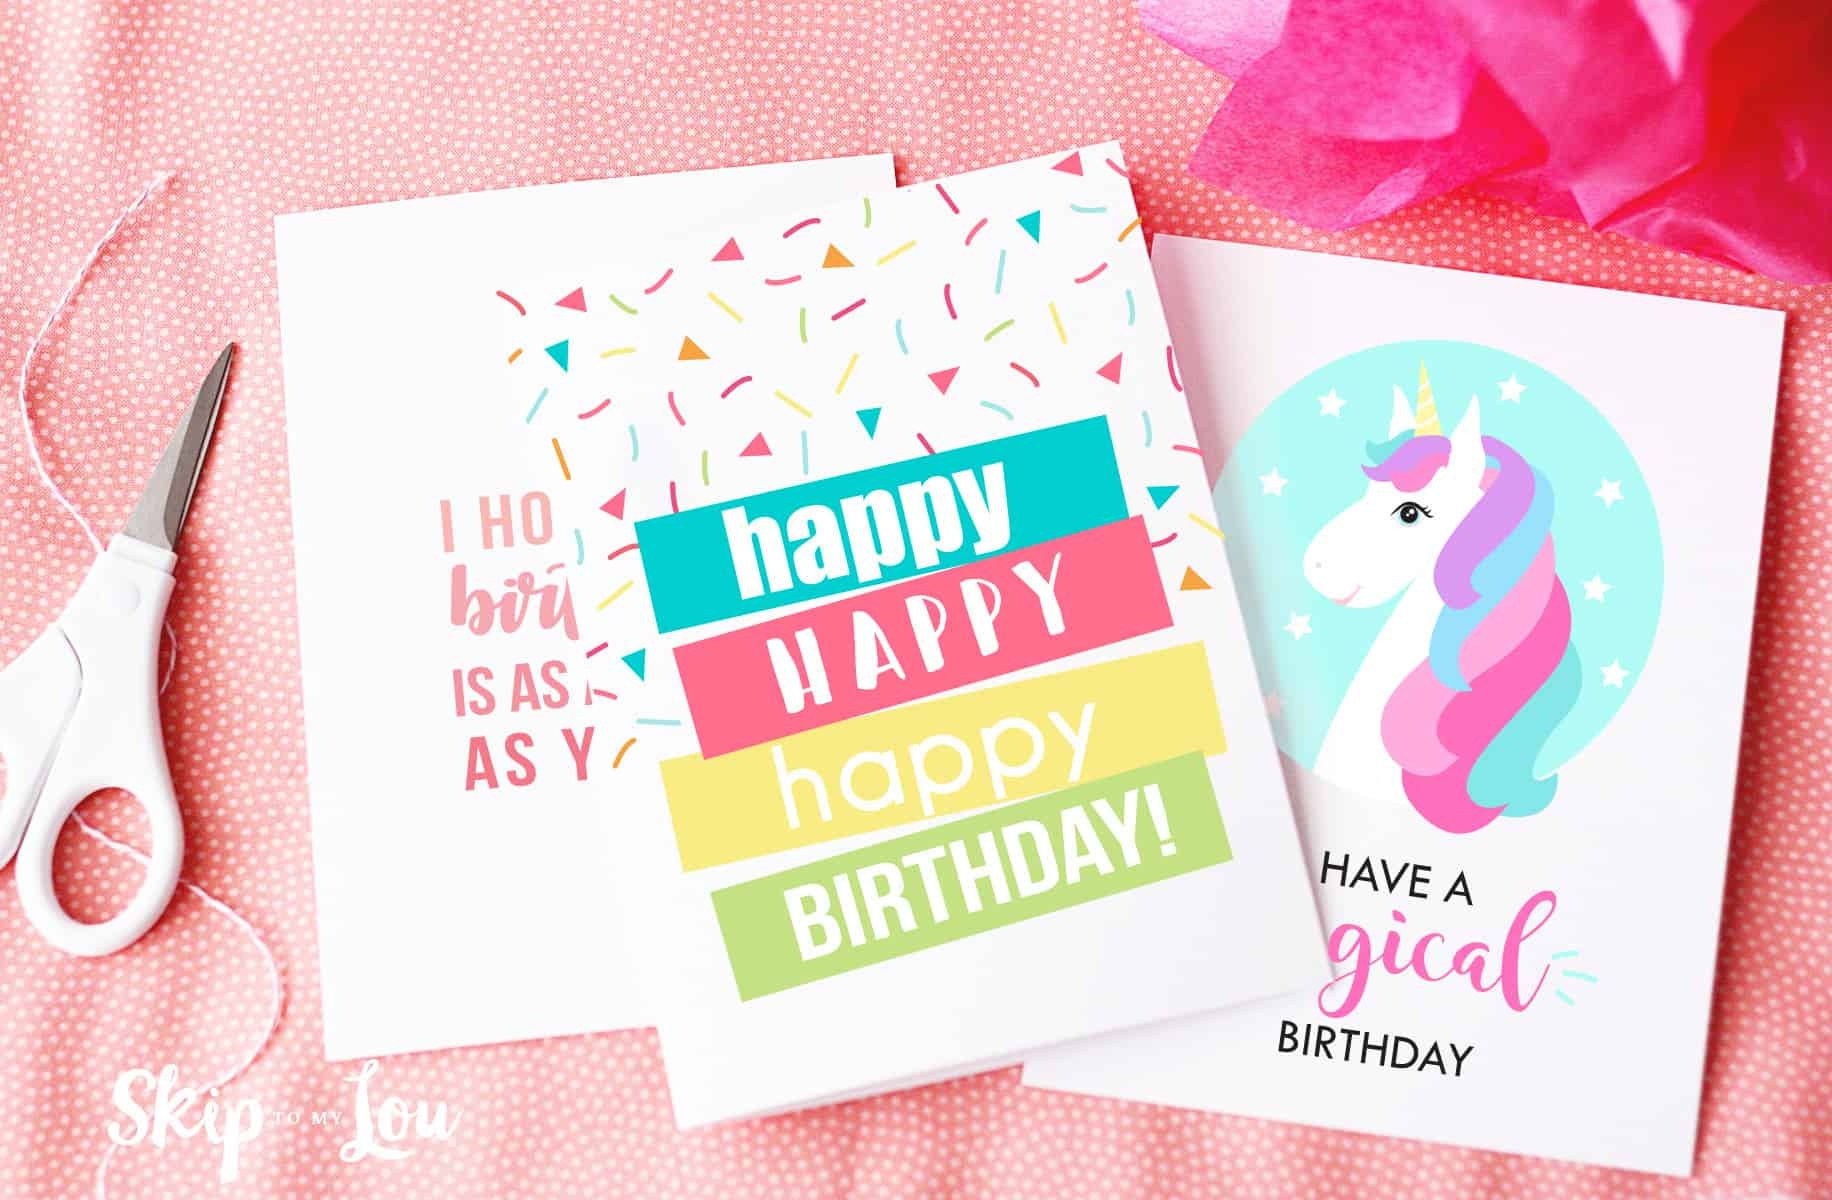 Free Printable Birthday Cards | Skip To My Lou - Free Printable Birthday Cards For Her